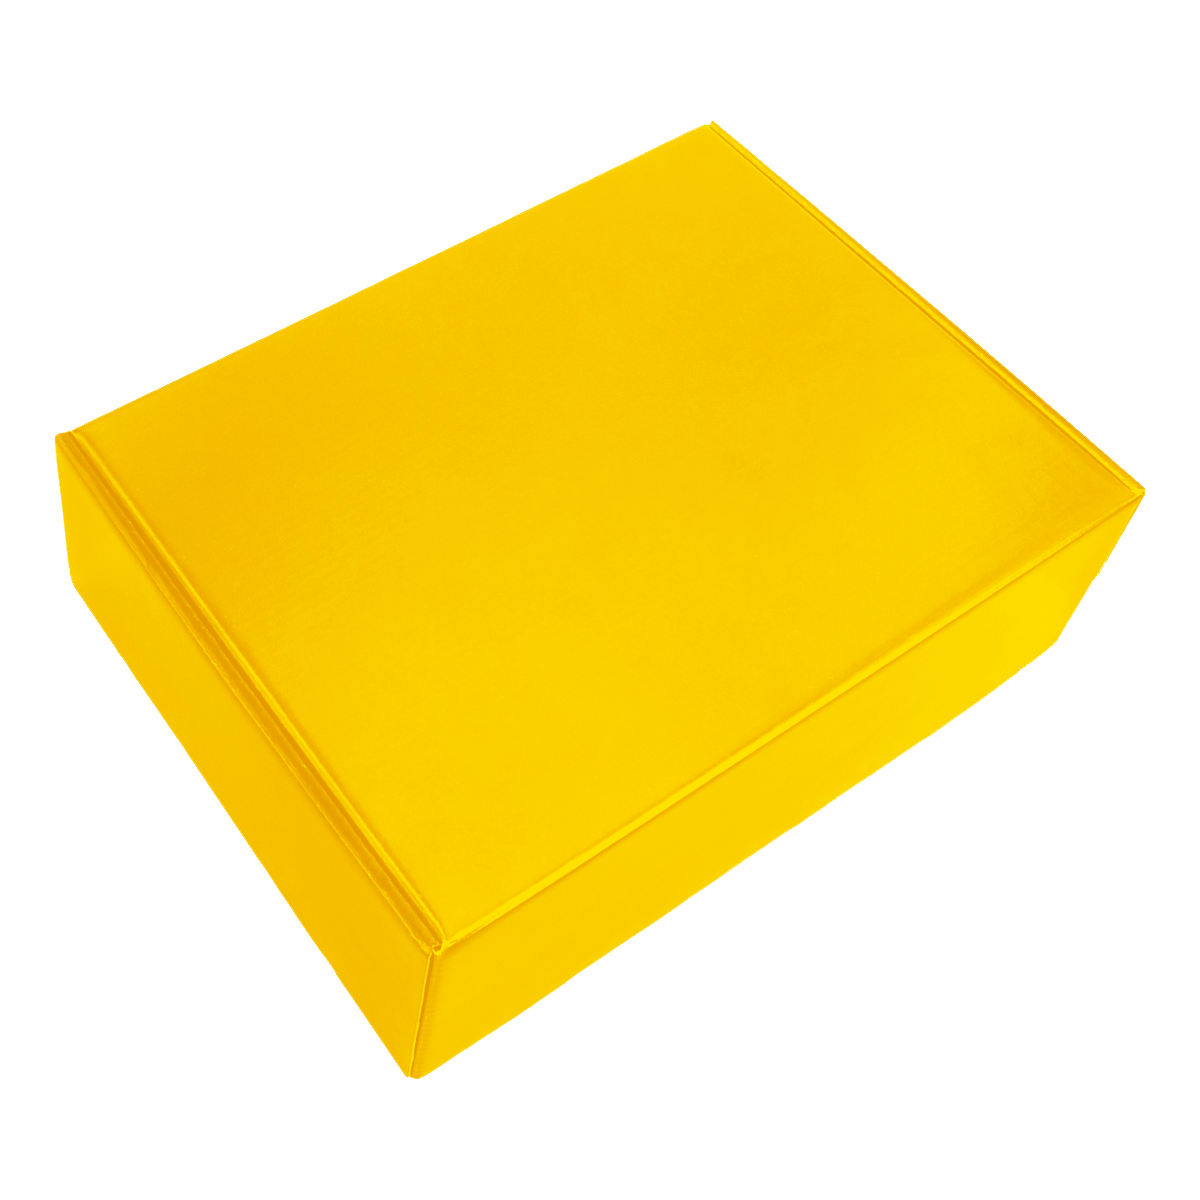 Набор Hot Box E (софт-тач) G (желтый), желтый, soft touch